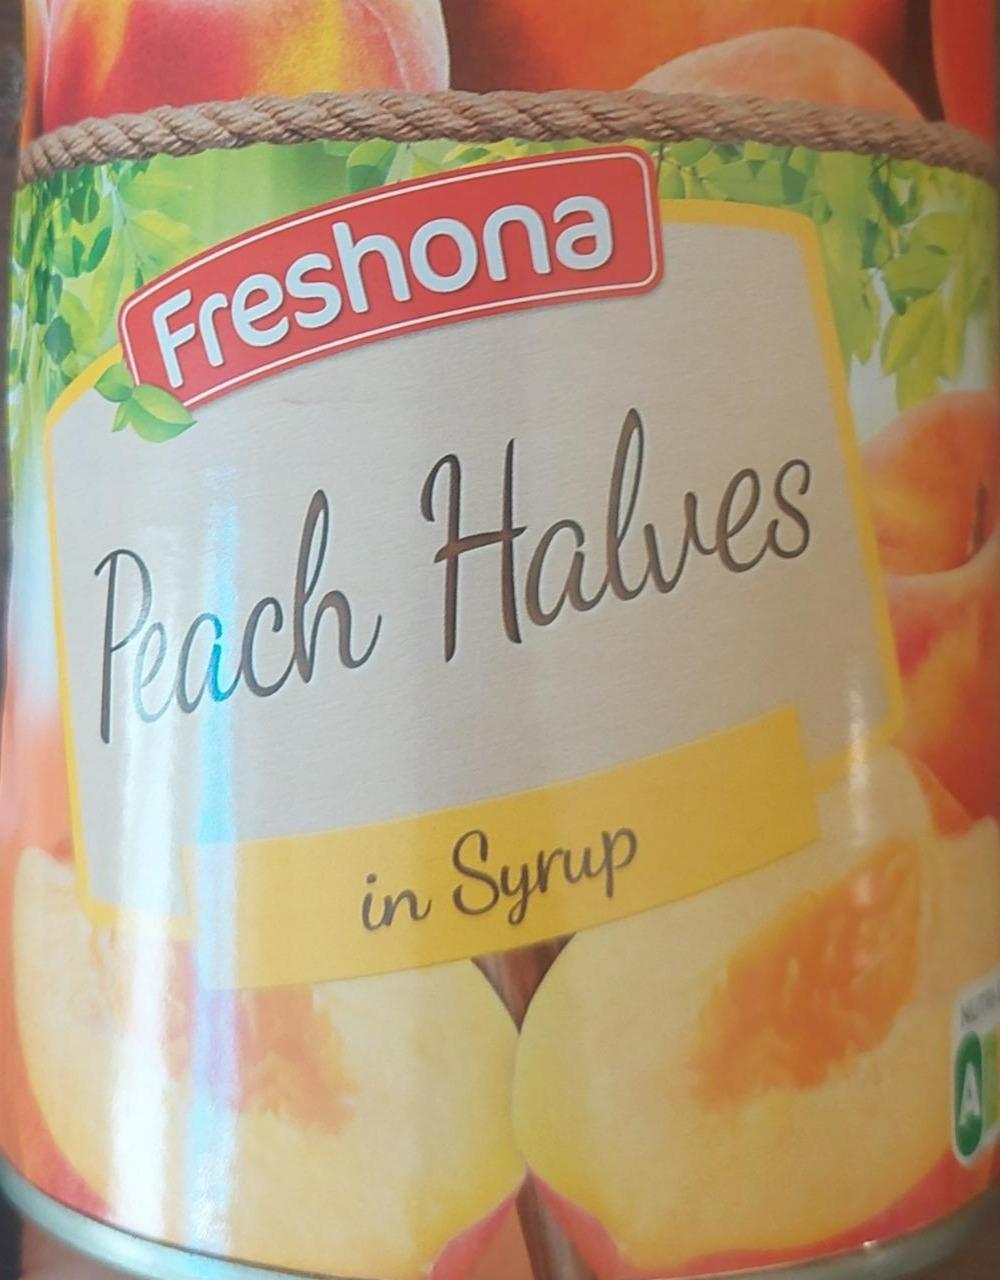 Fotografie - Peach halves in syrup Freshona